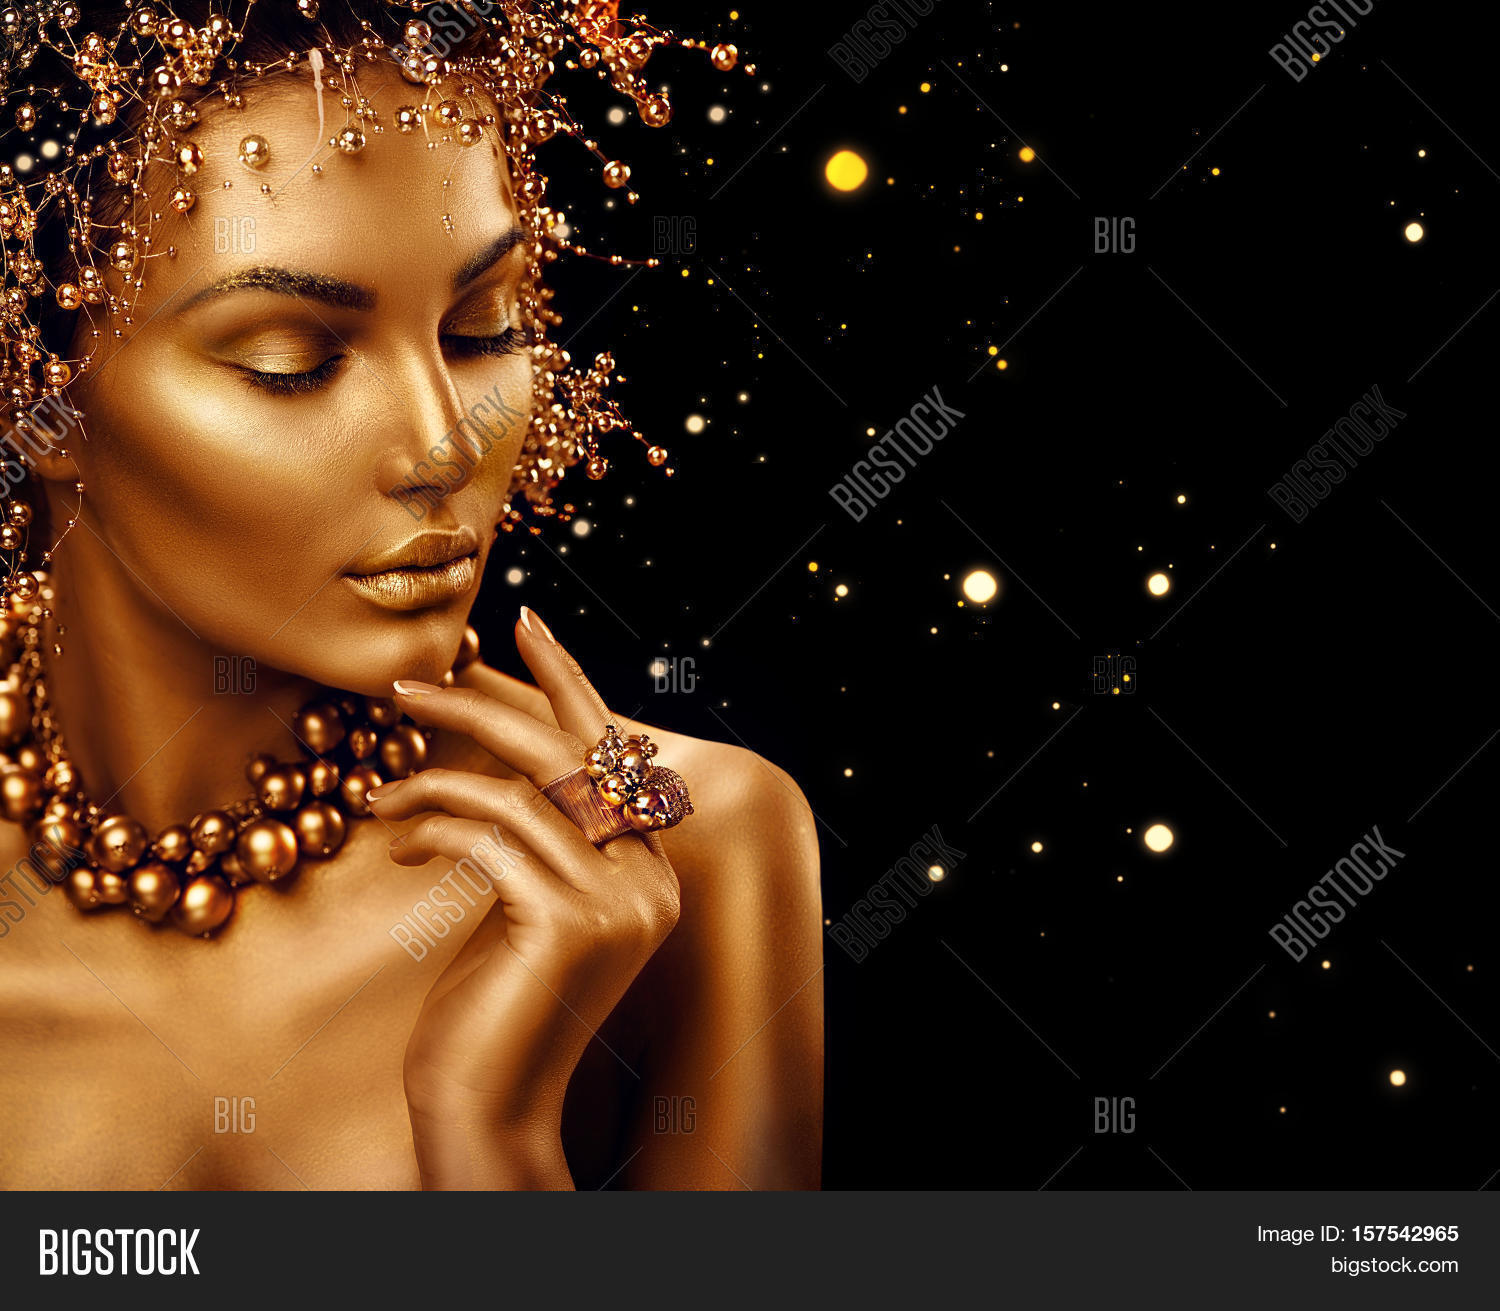 Beauty Fashion Model Image & Photo (Free Trial) | Bigstock